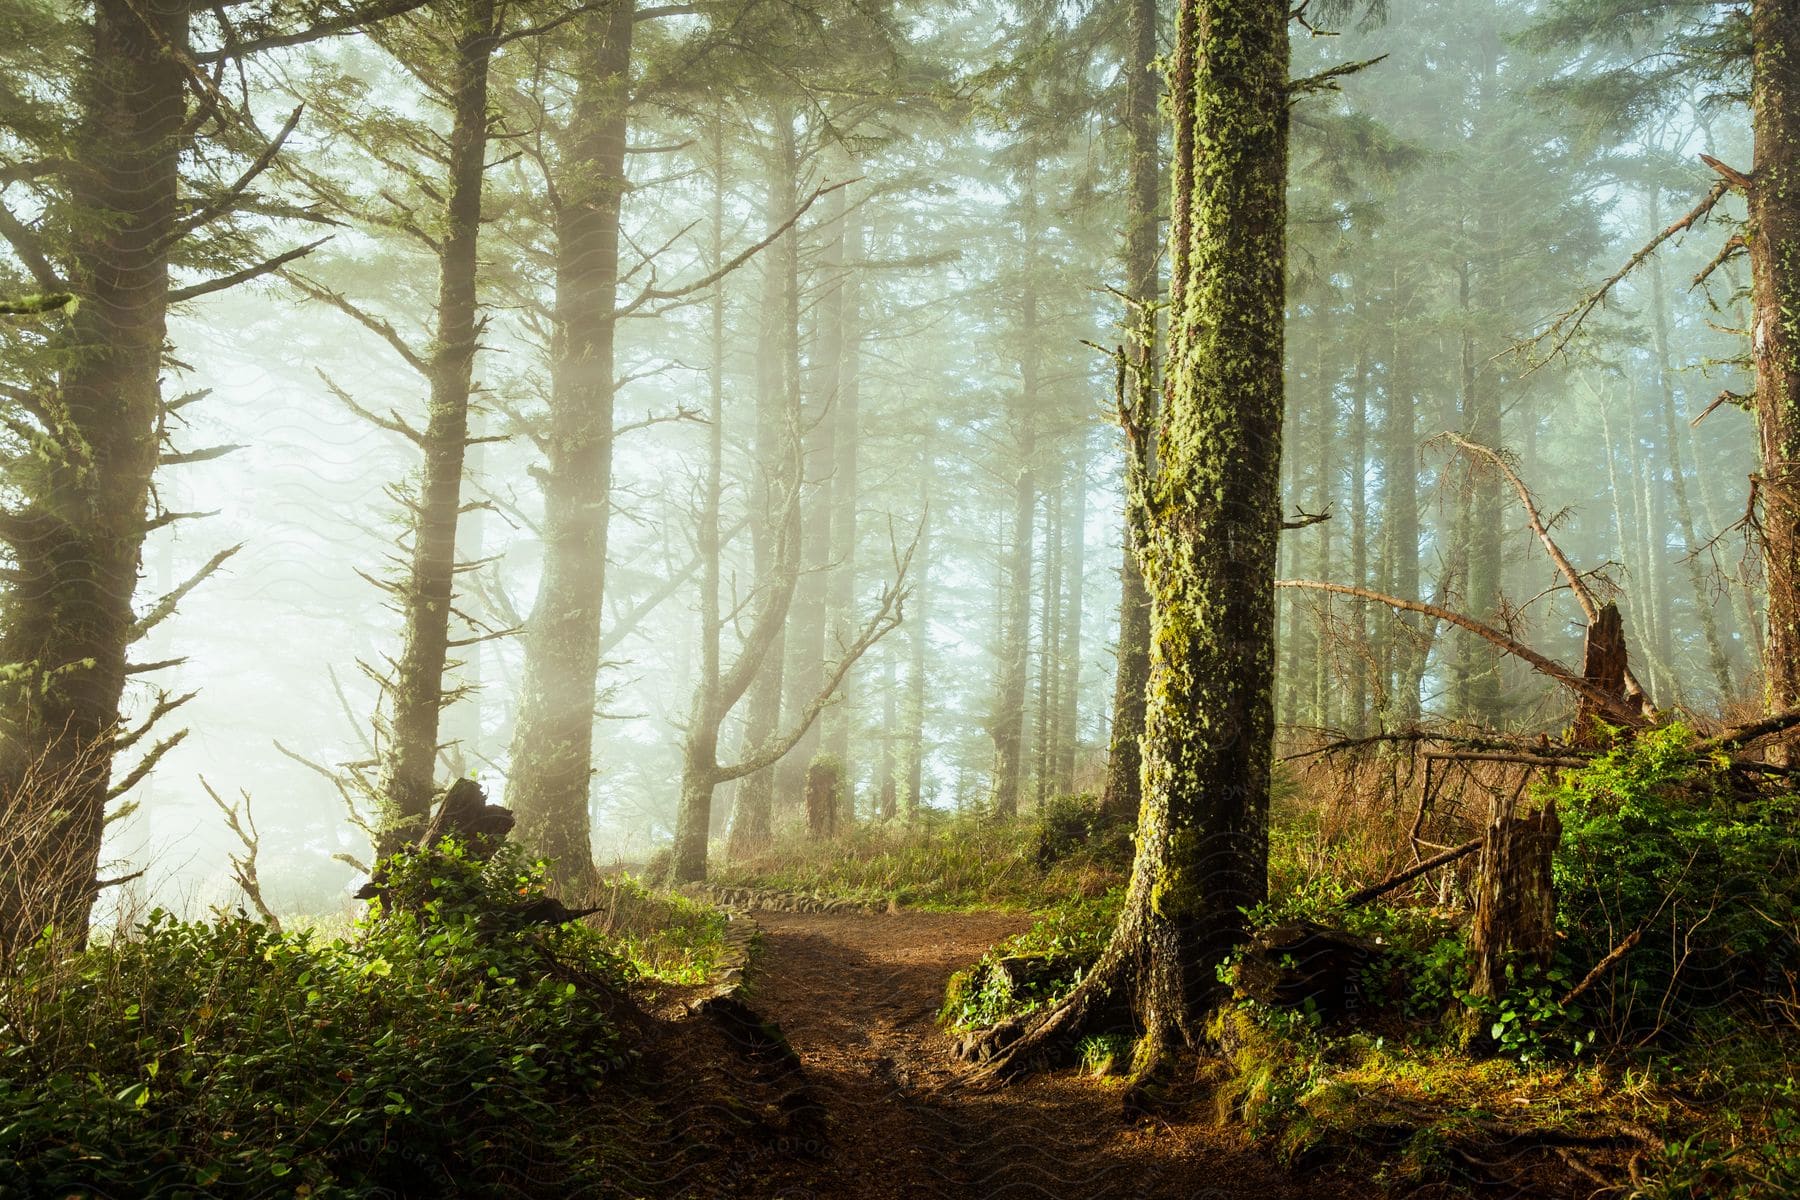 A hiking trail runs through an evergreen forest on a hillside.